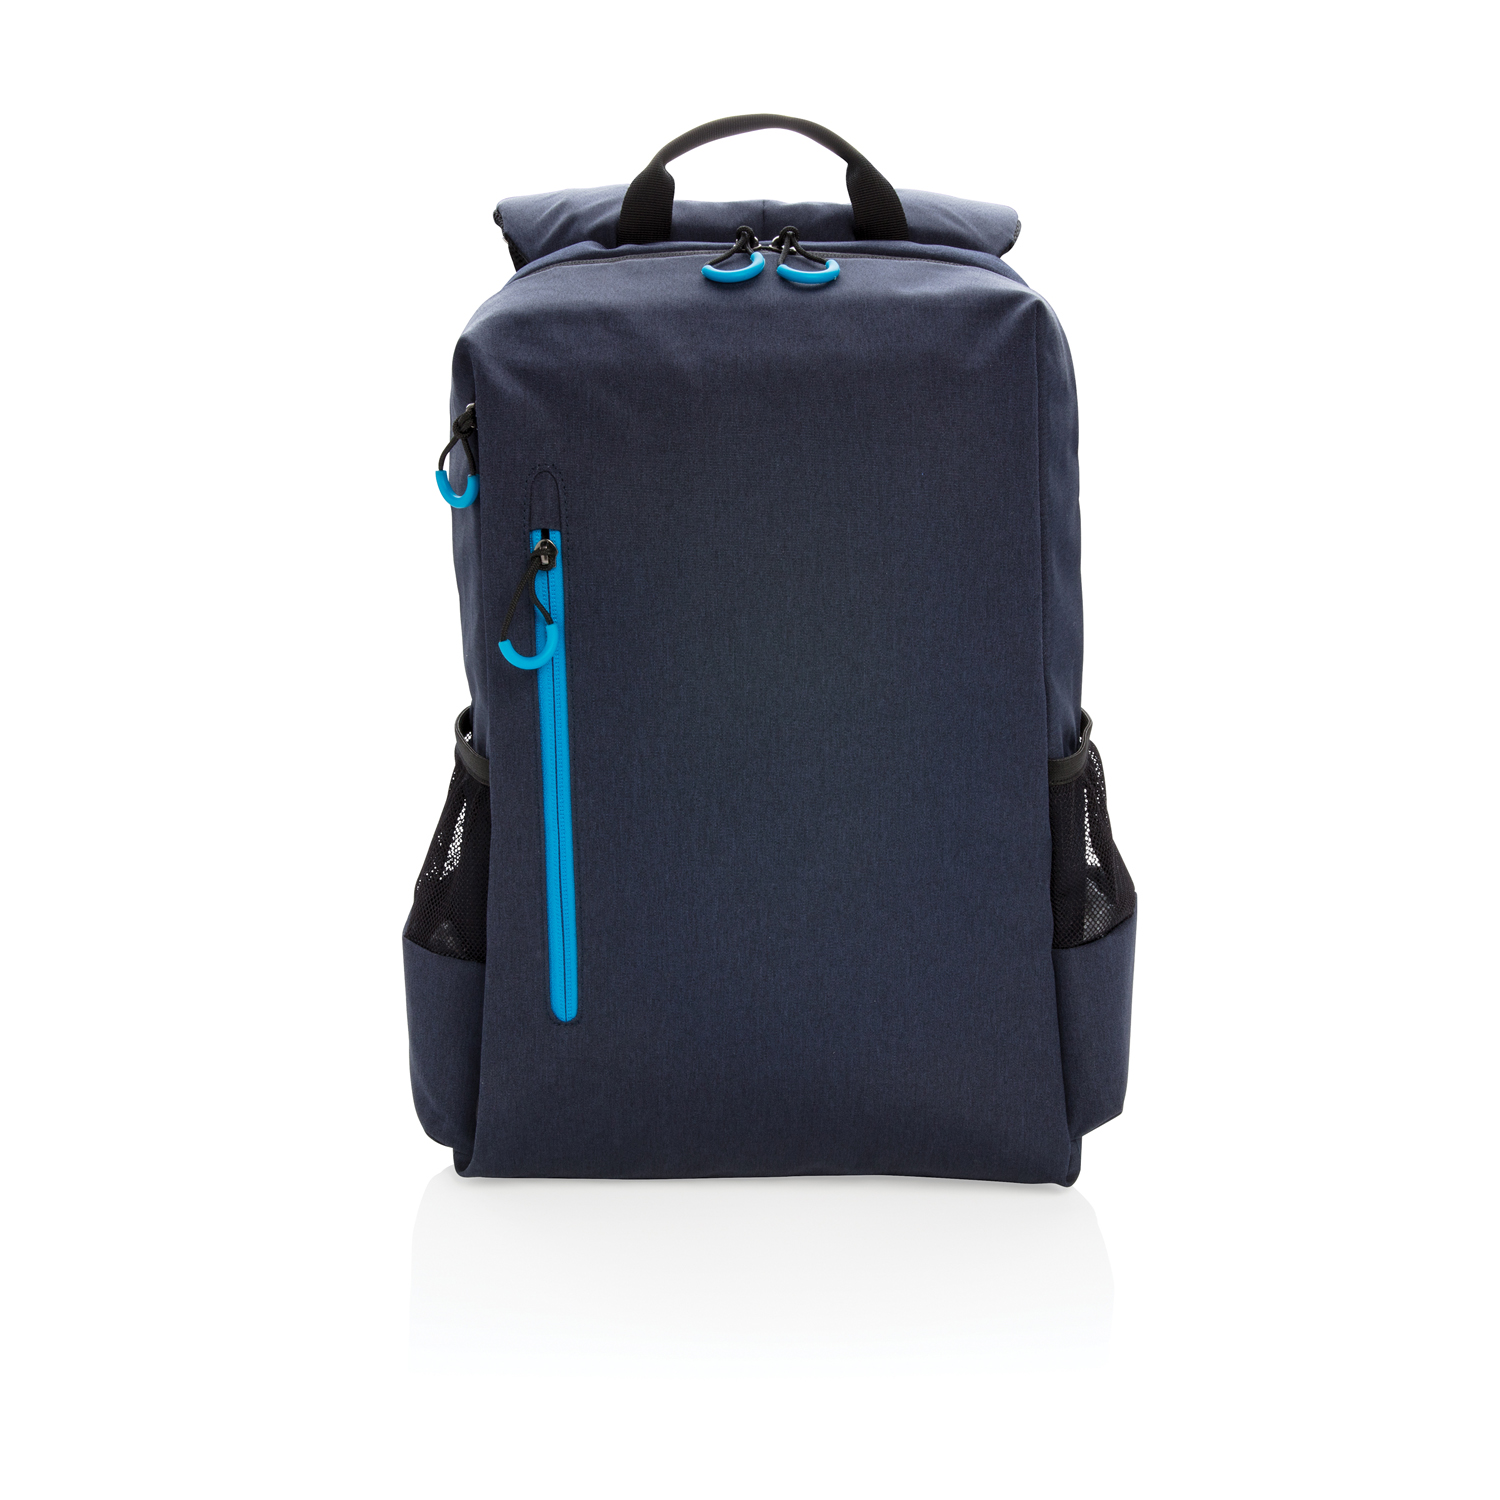 Рюкзак для ноутбука Lima 15